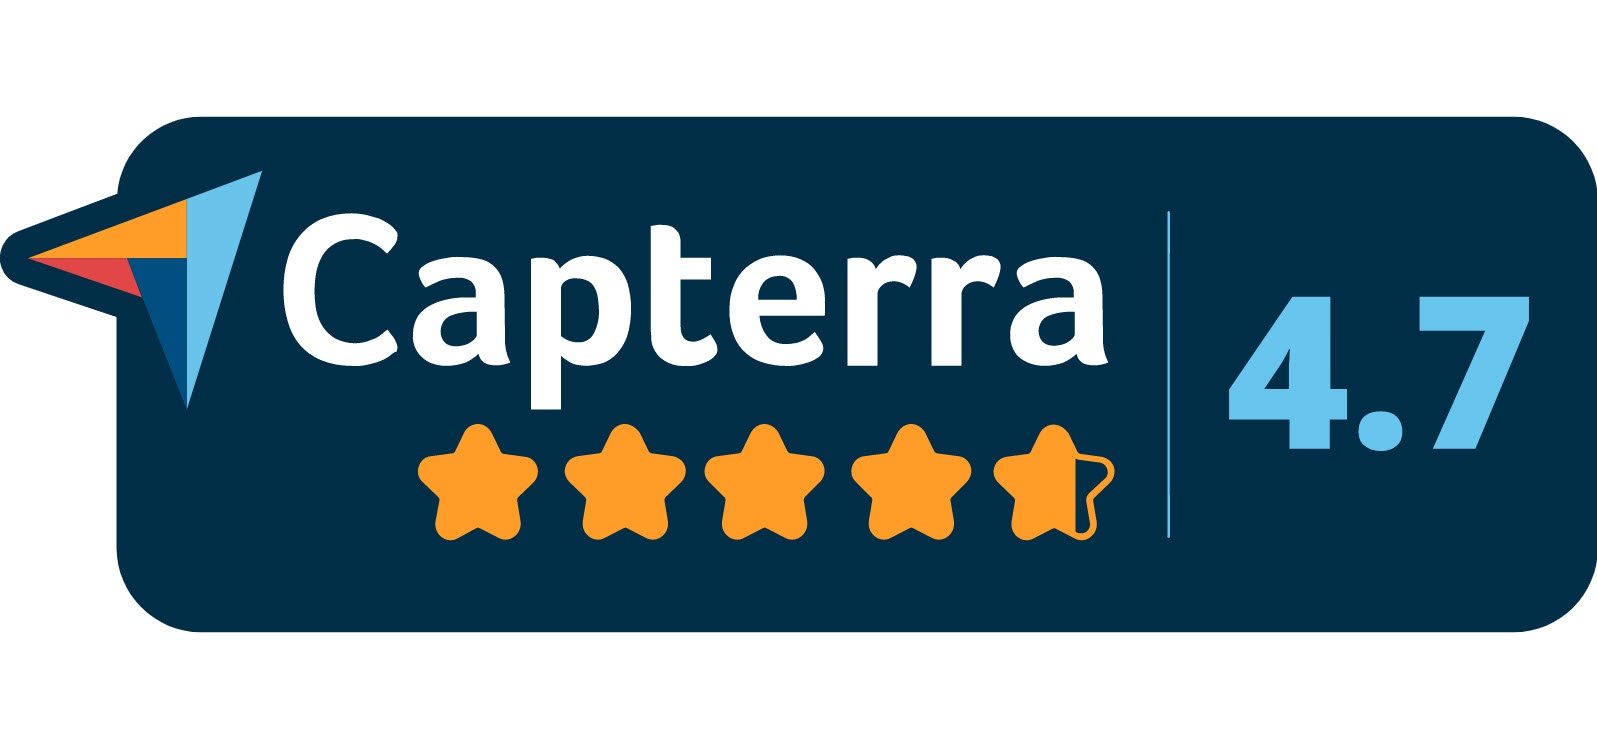 Capterra-4.7-badge